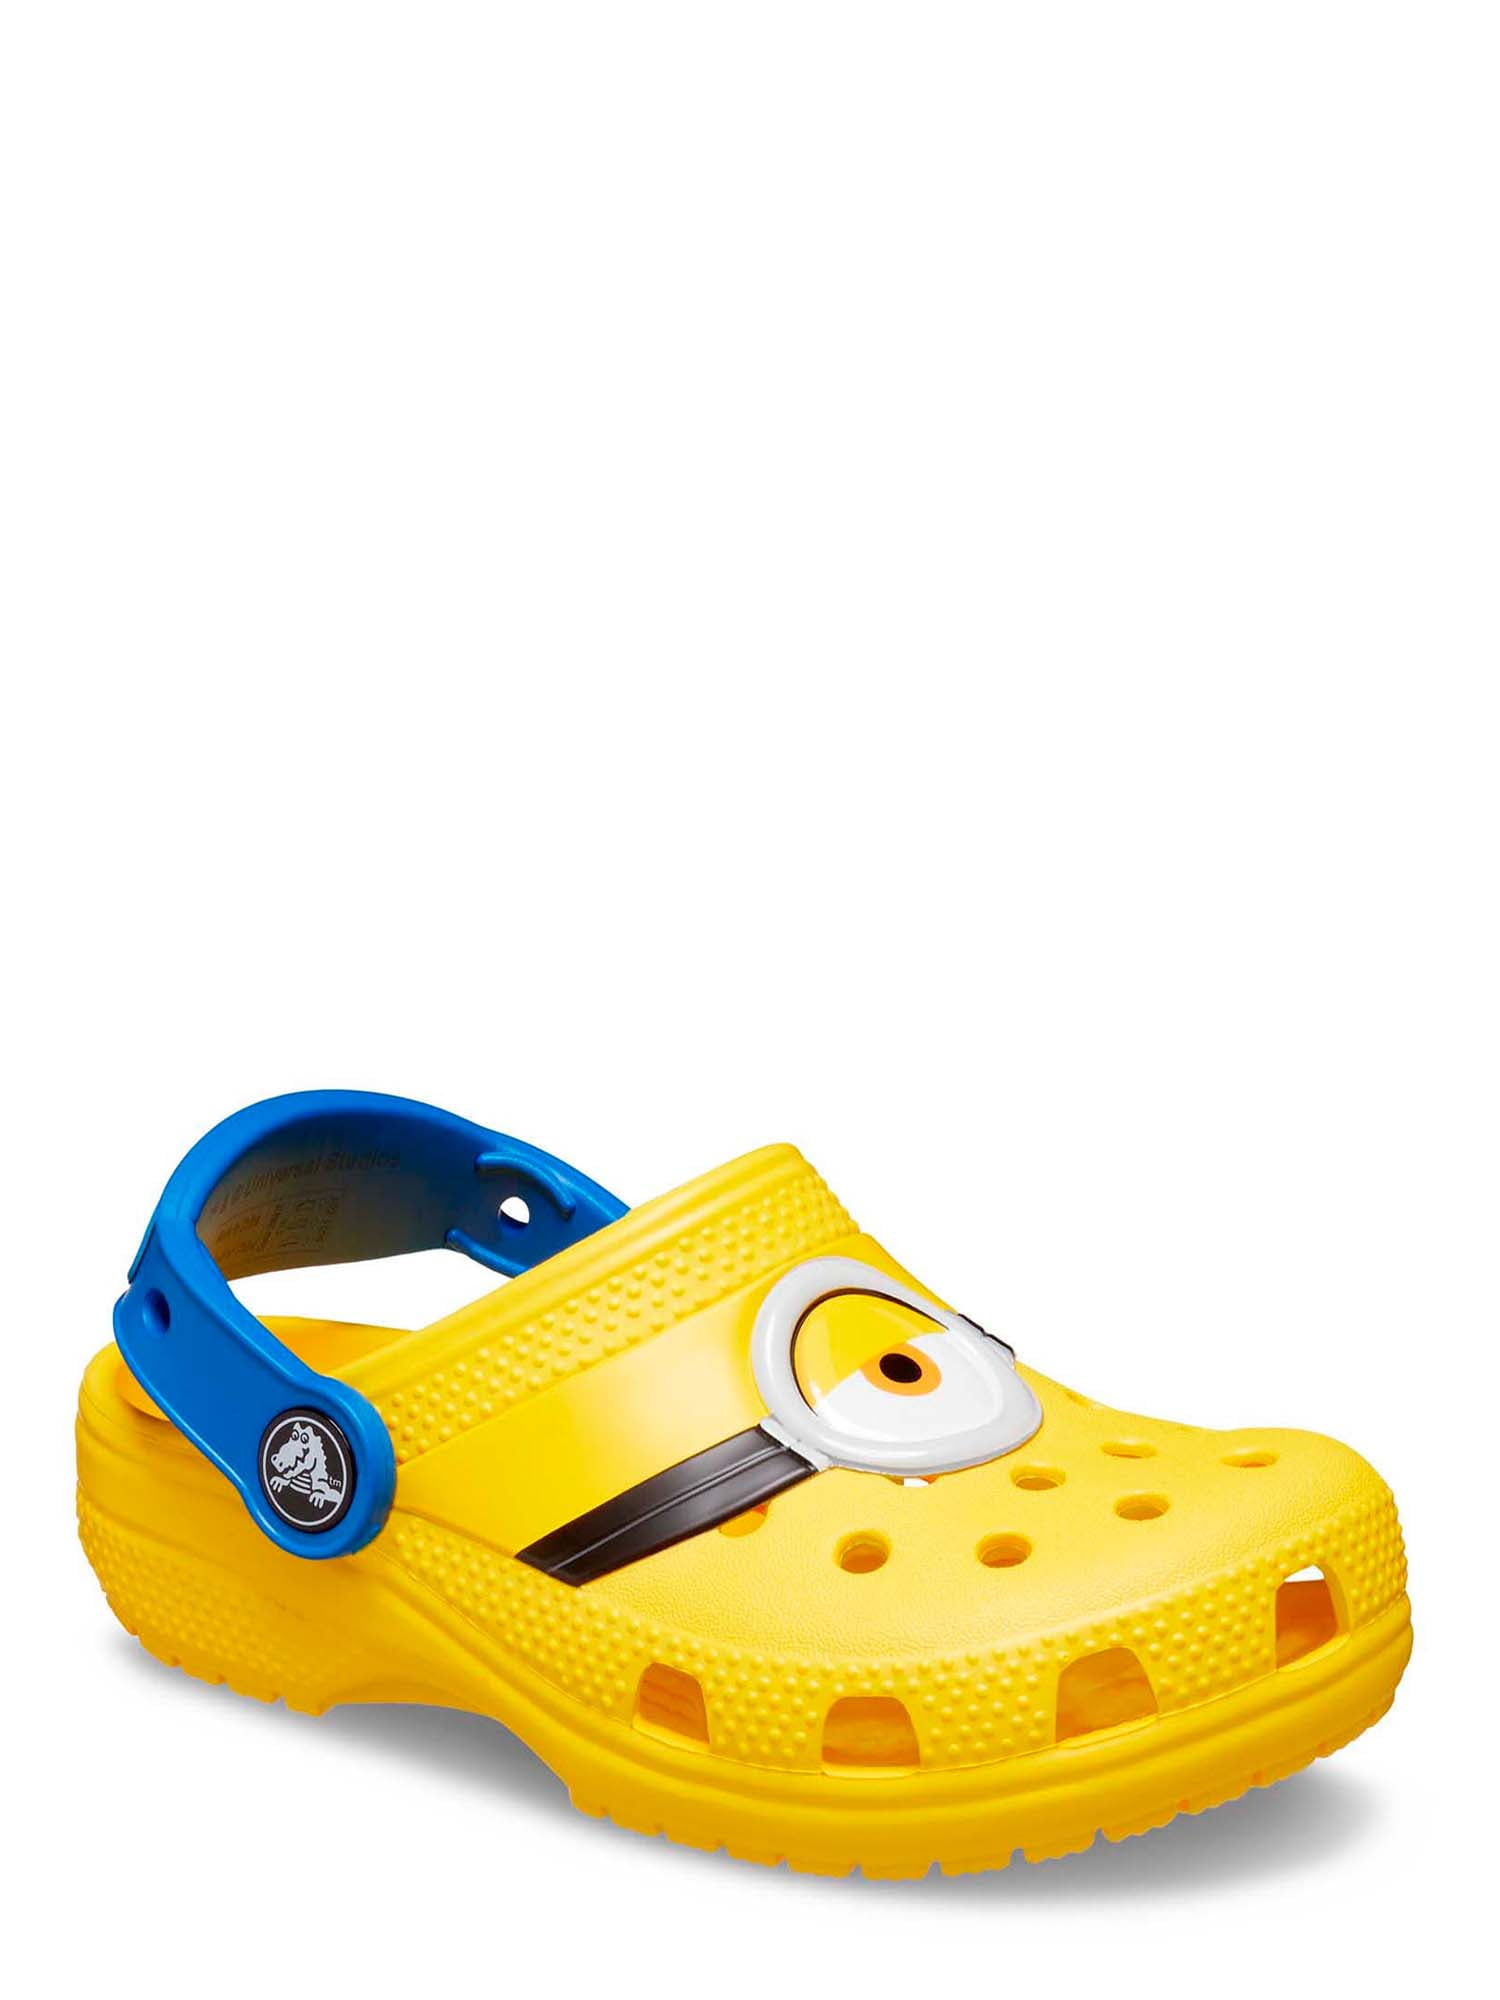 Crocs Toddler & Kids Fun Classic AM Minions Sizes 4-3 - Walmart.com